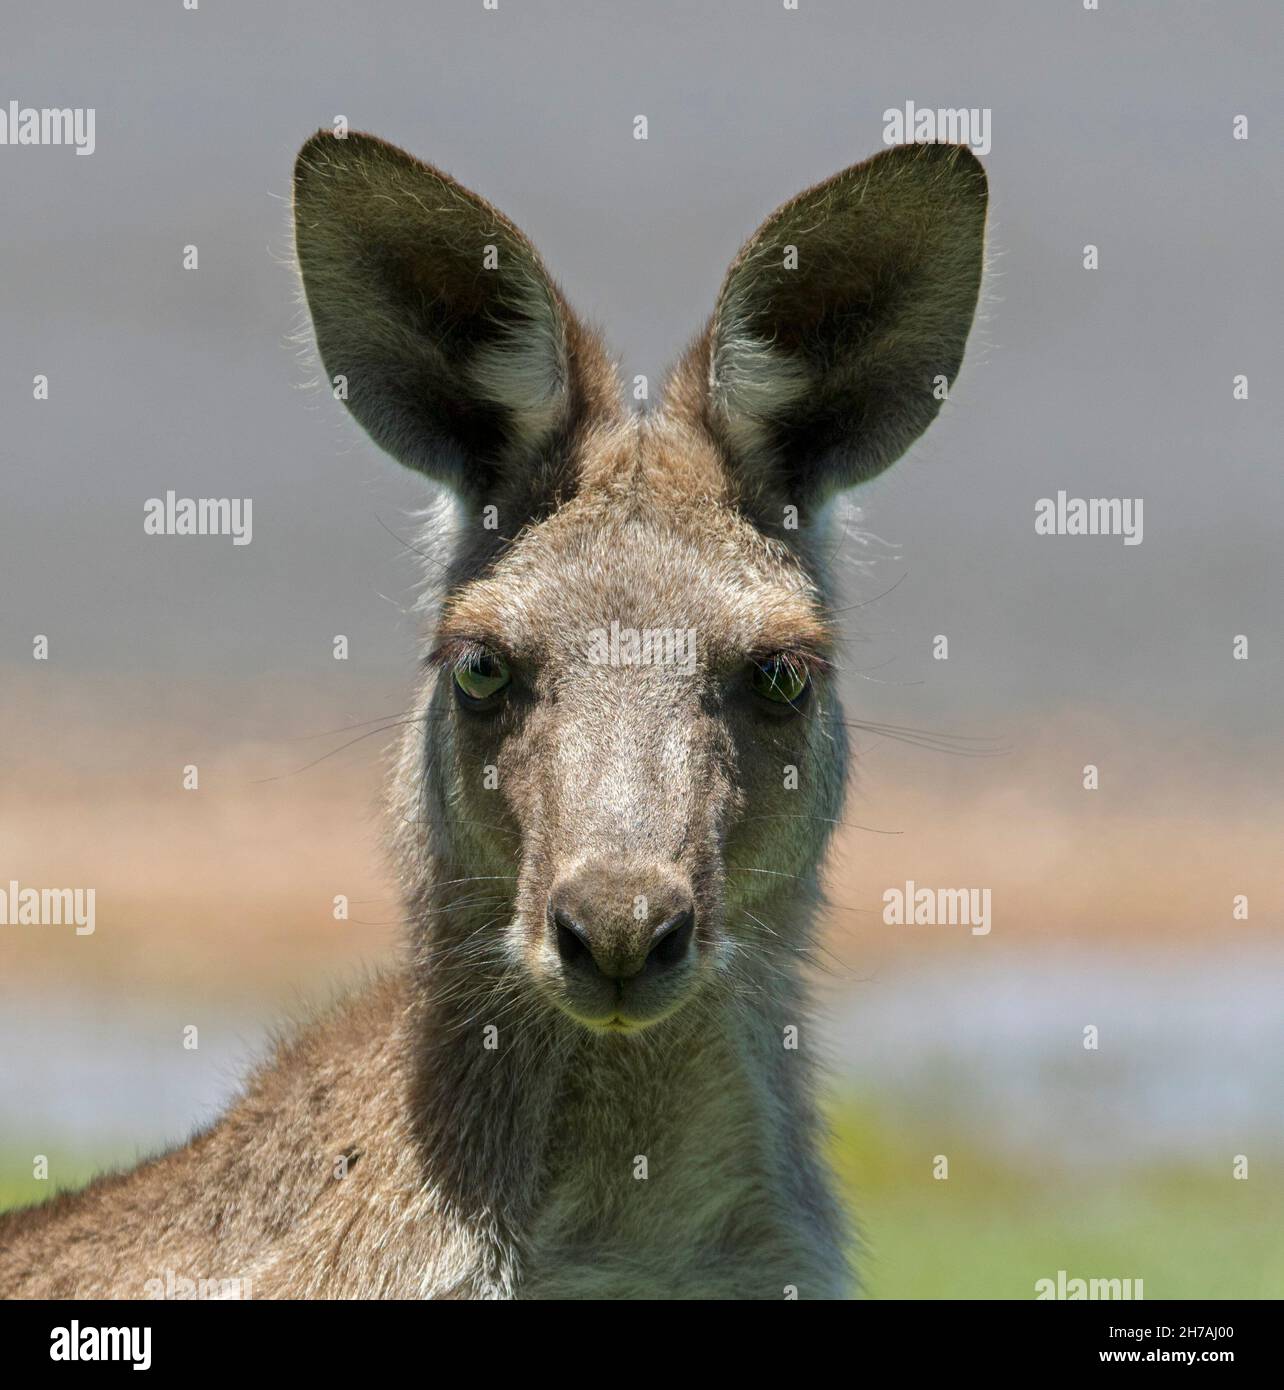 Portrait of beautiful face of Eastern grey kangaroo, Macropus giganteus, in the wild, alert and staring at camera in coastal Queensland Australia Stock Photo